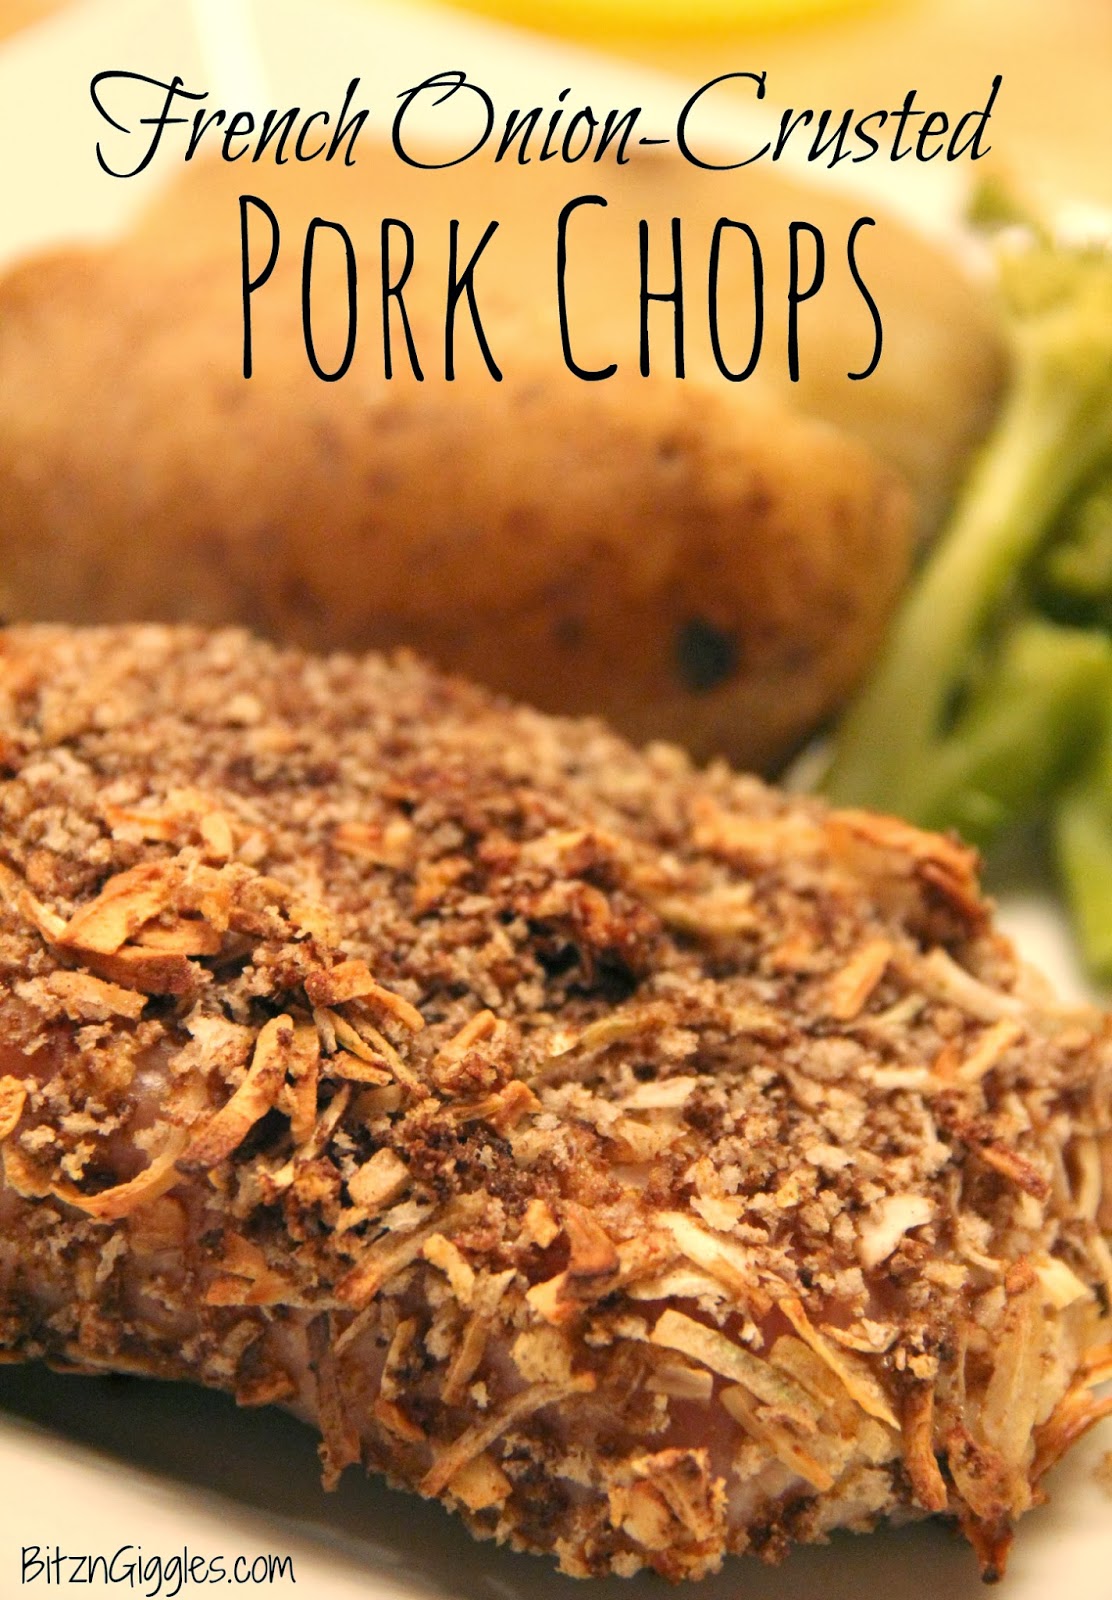 https://www.bitzngiggles.com/2014/02/french-onion-crusted-pork-chops.html